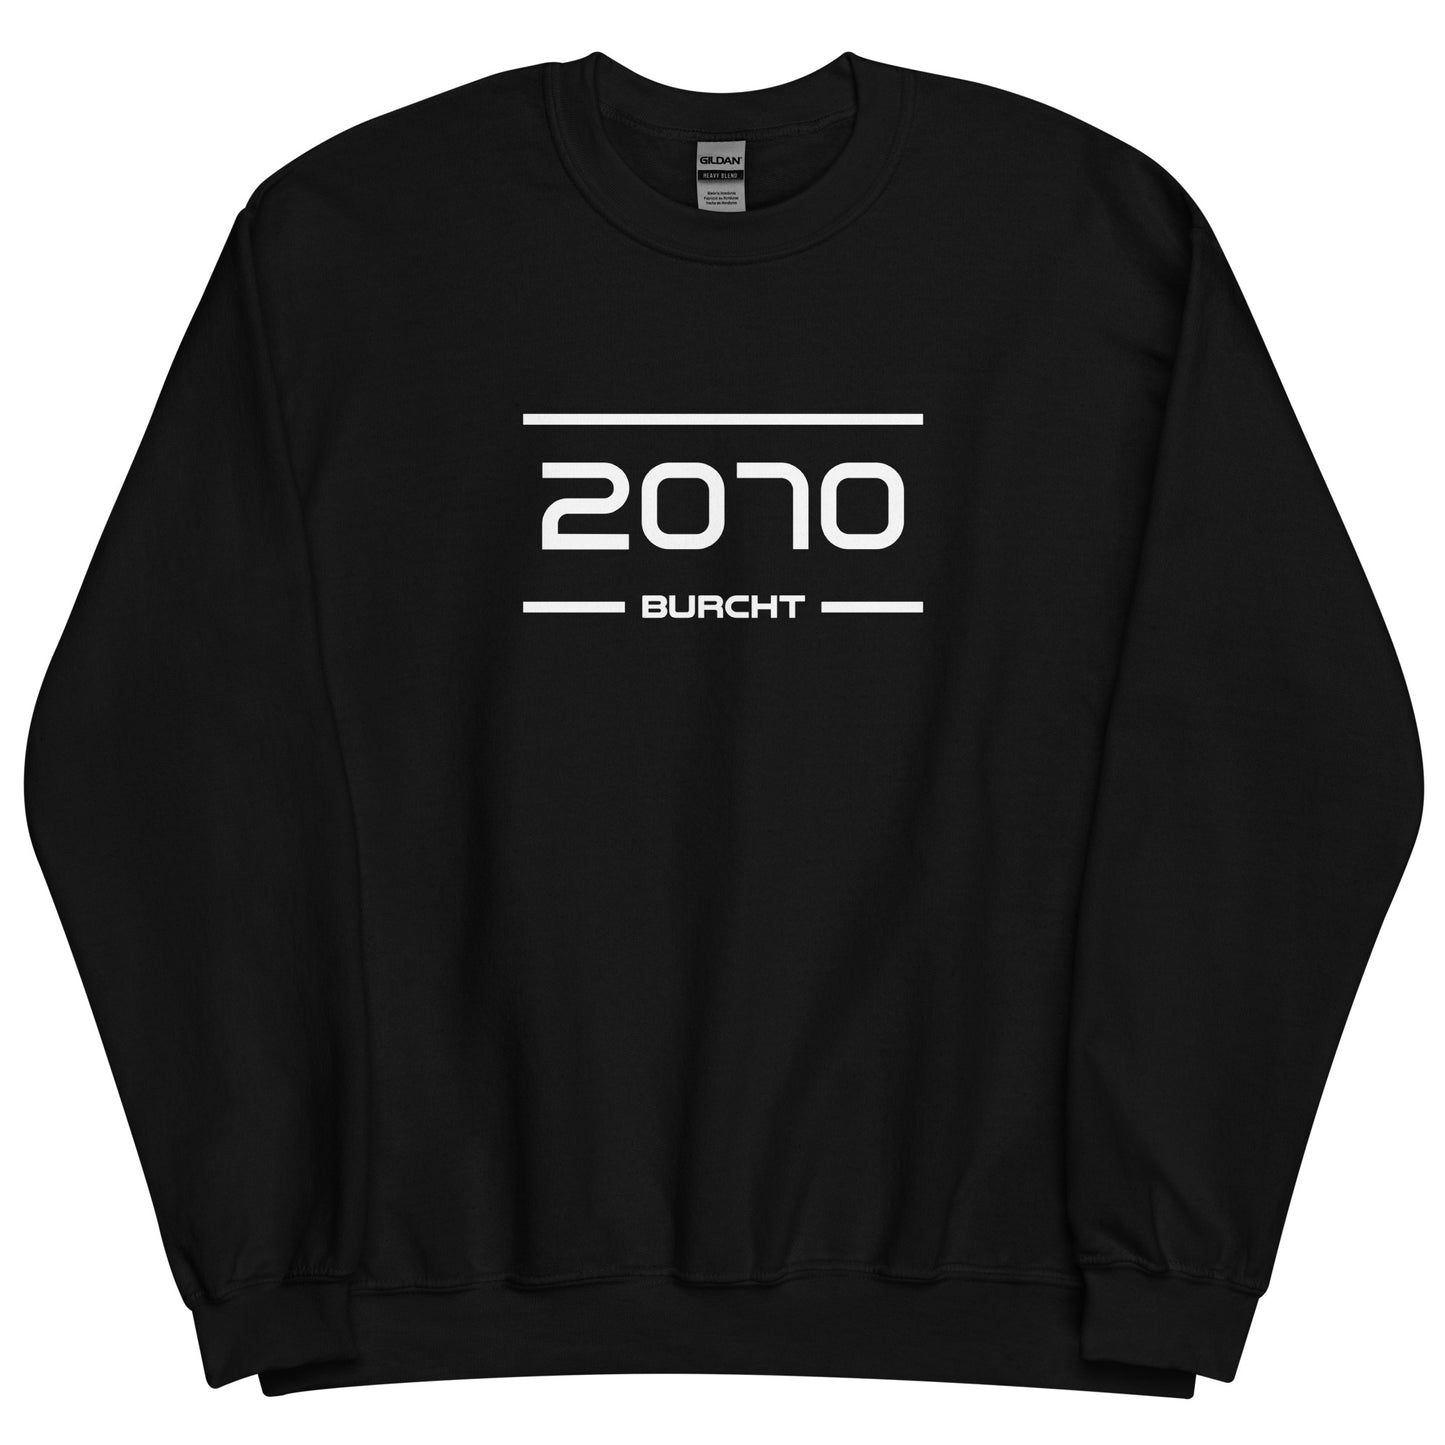 Sweater - 2070 - Burcht (M/V)